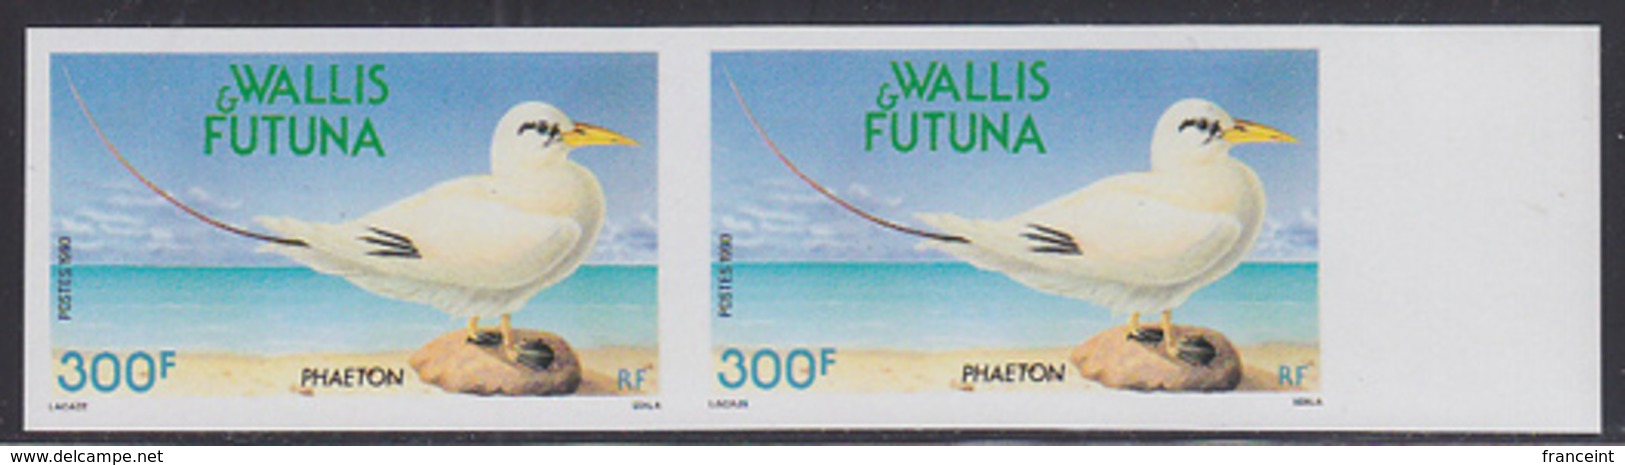 WALLIS & FUTUNA (1990) Phaeton. Imperforate Pair. Scott No 393, Yvert No 398. - Imperforates, Proofs & Errors